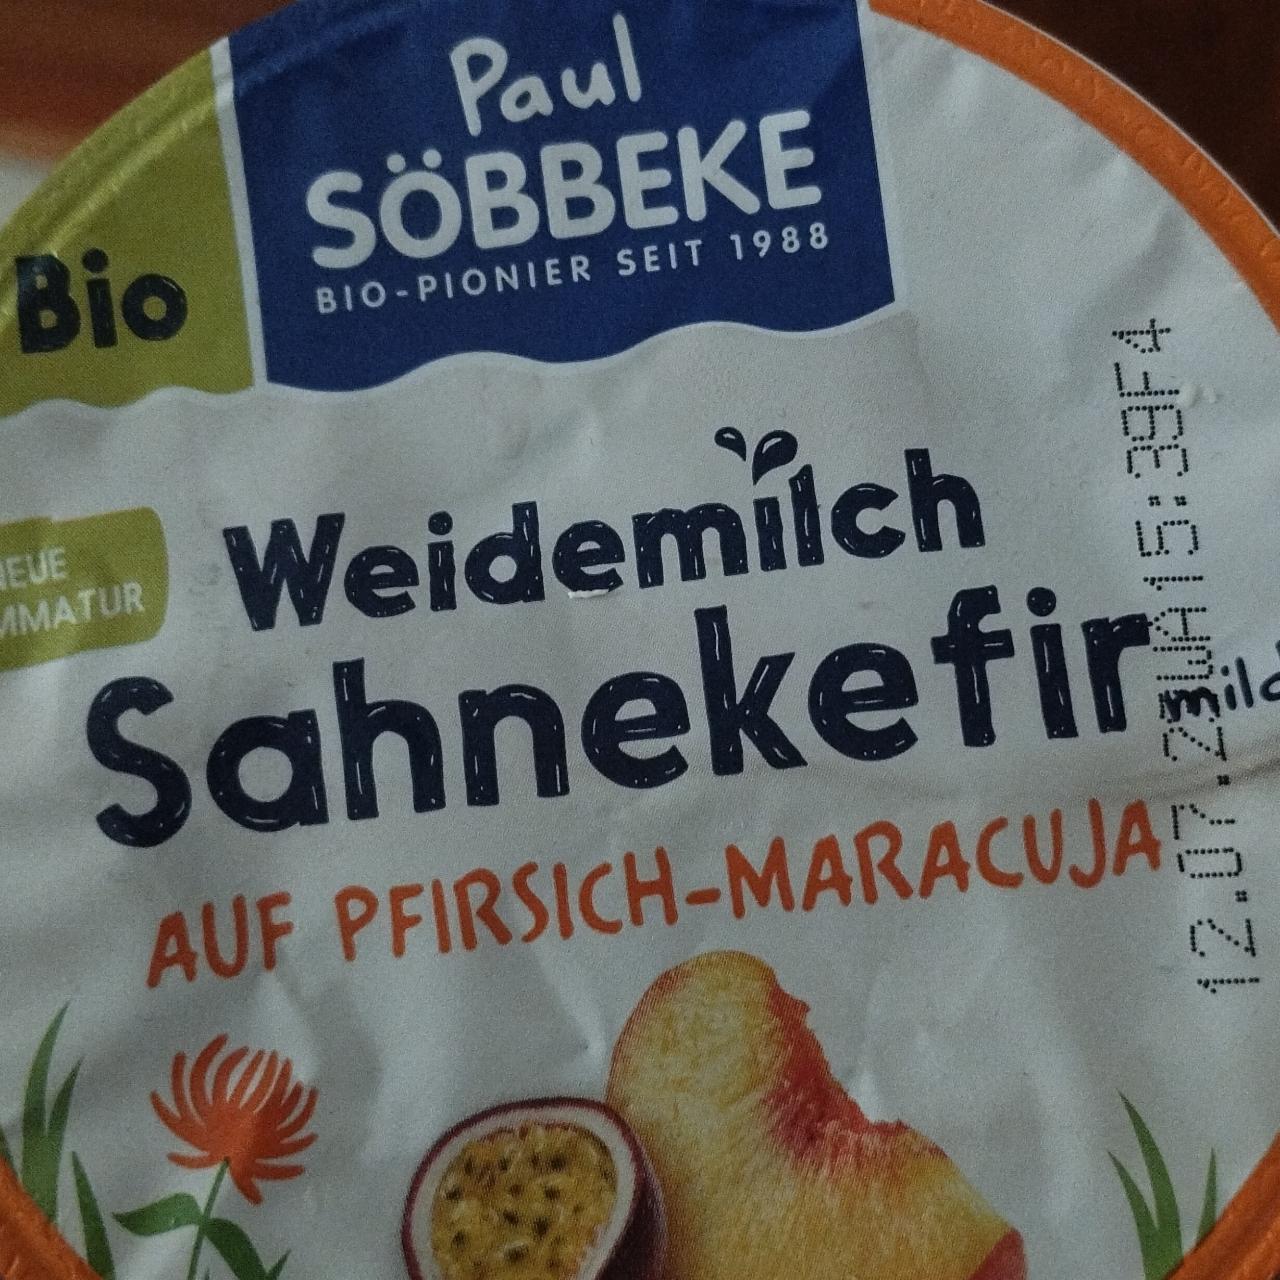 Képek - Weidemilch sahnekefir auf pfirsich-maracuja Paul Söbbeke